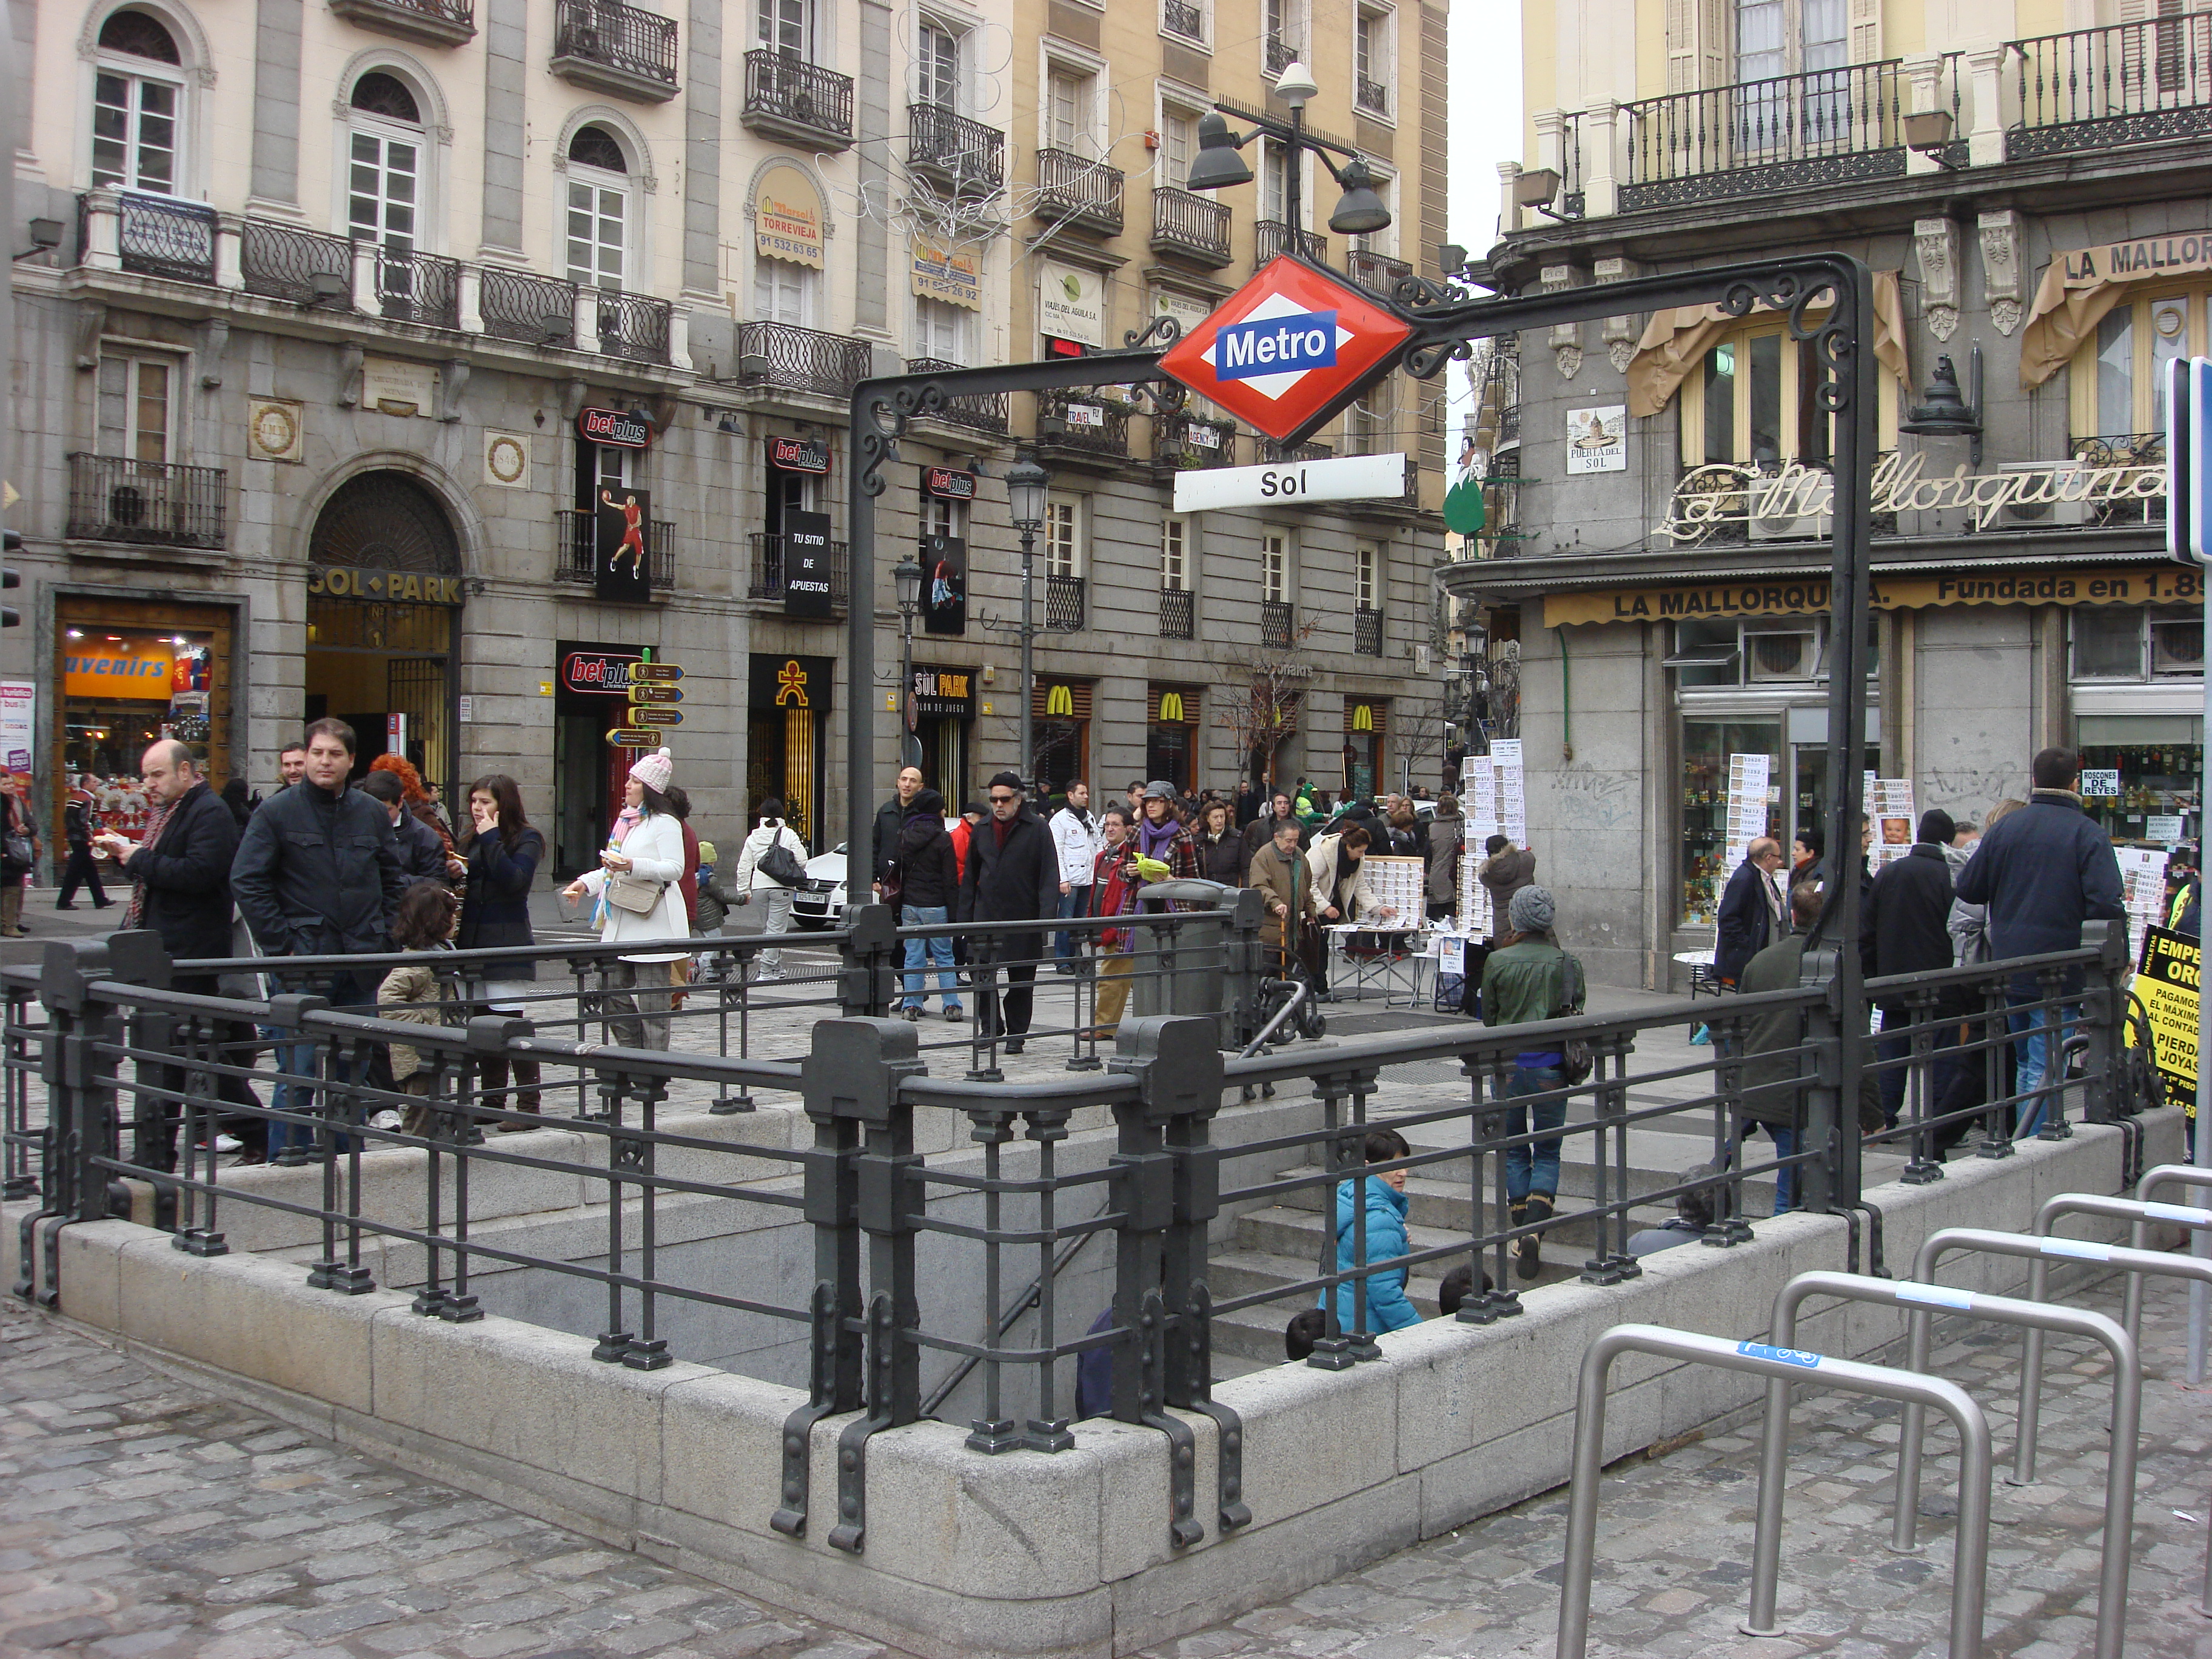 Madrid_Metro_Sol_Station_030.jpg